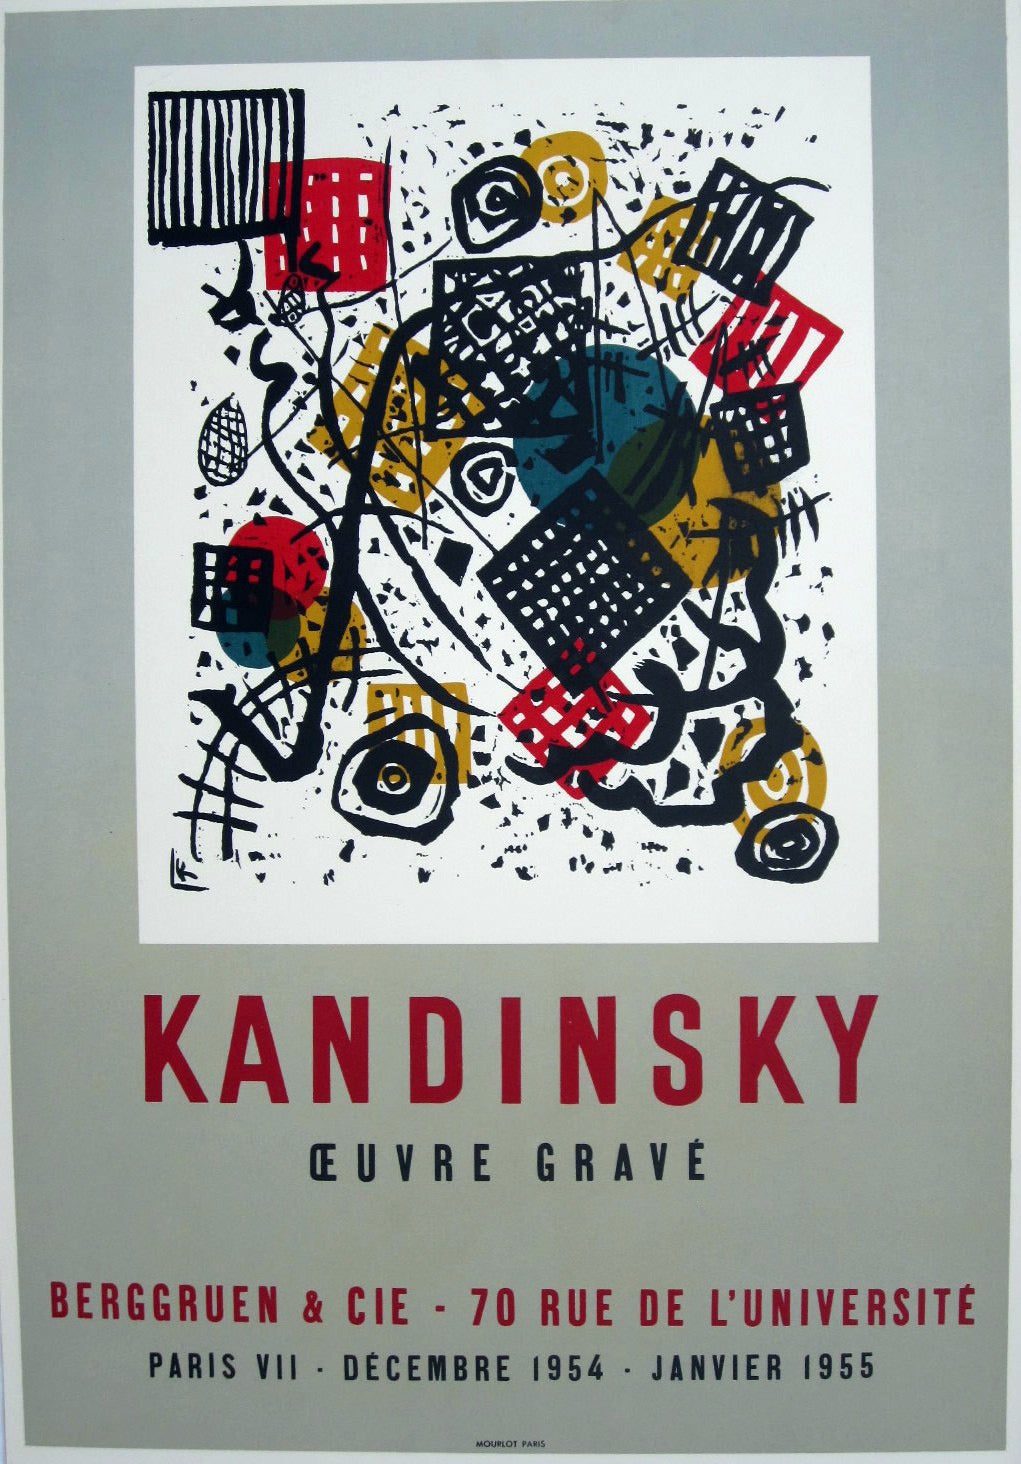 Wassily Kandinsky Abstract Print - Oeuvre Grave - Berggruen & Cie